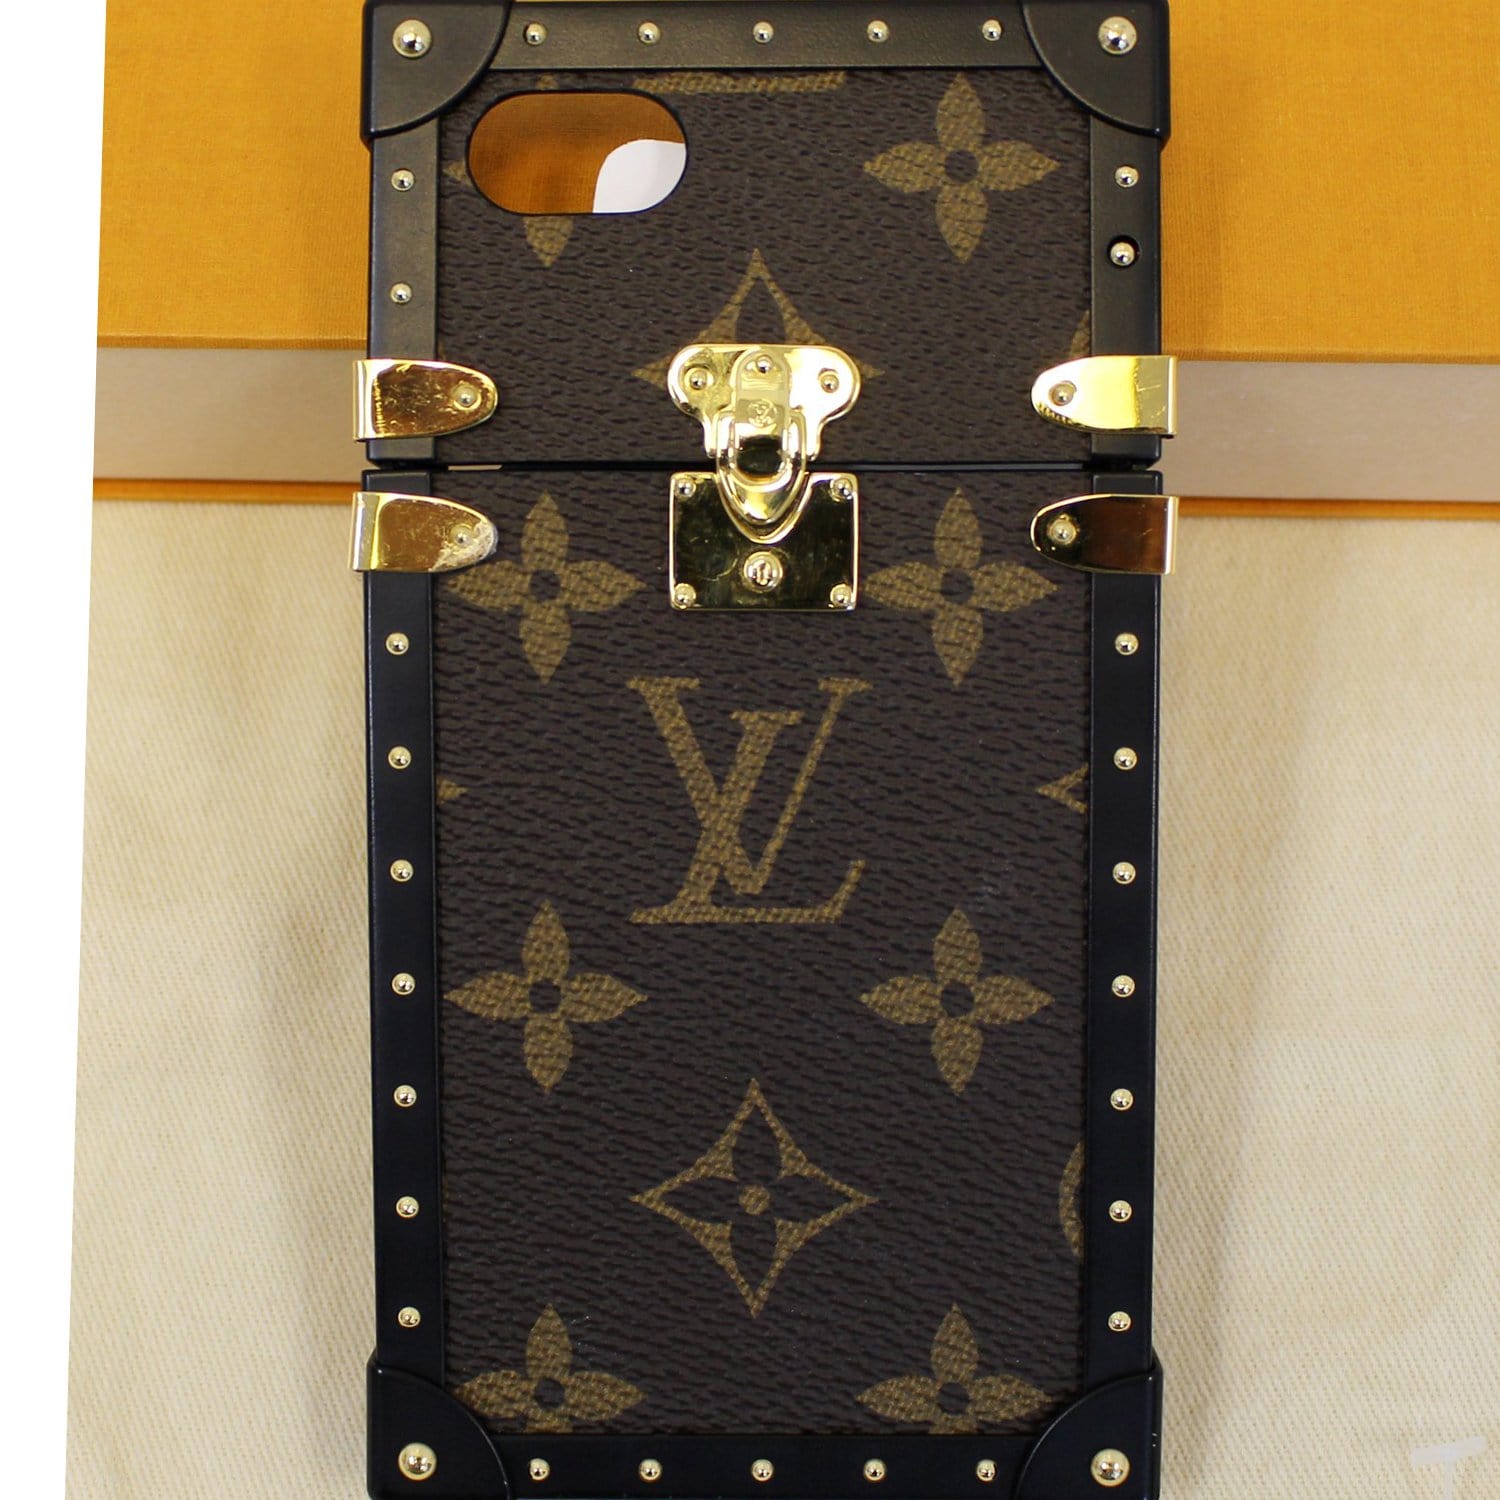 Fake Louis Vuitton Iphone 7 Case